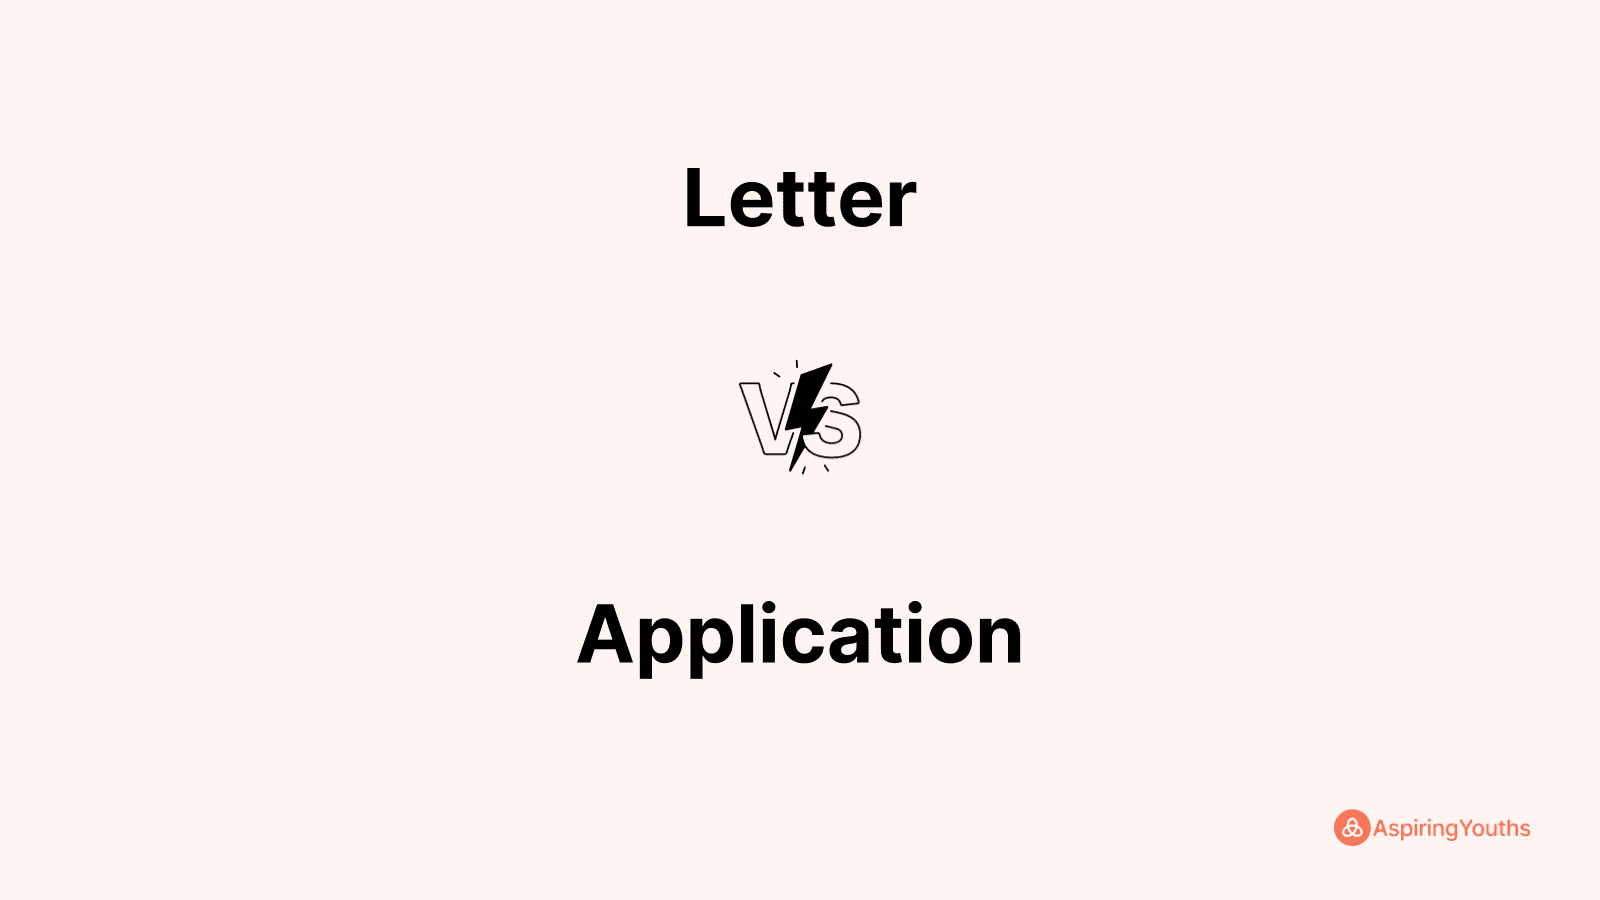 request letter vs application letter